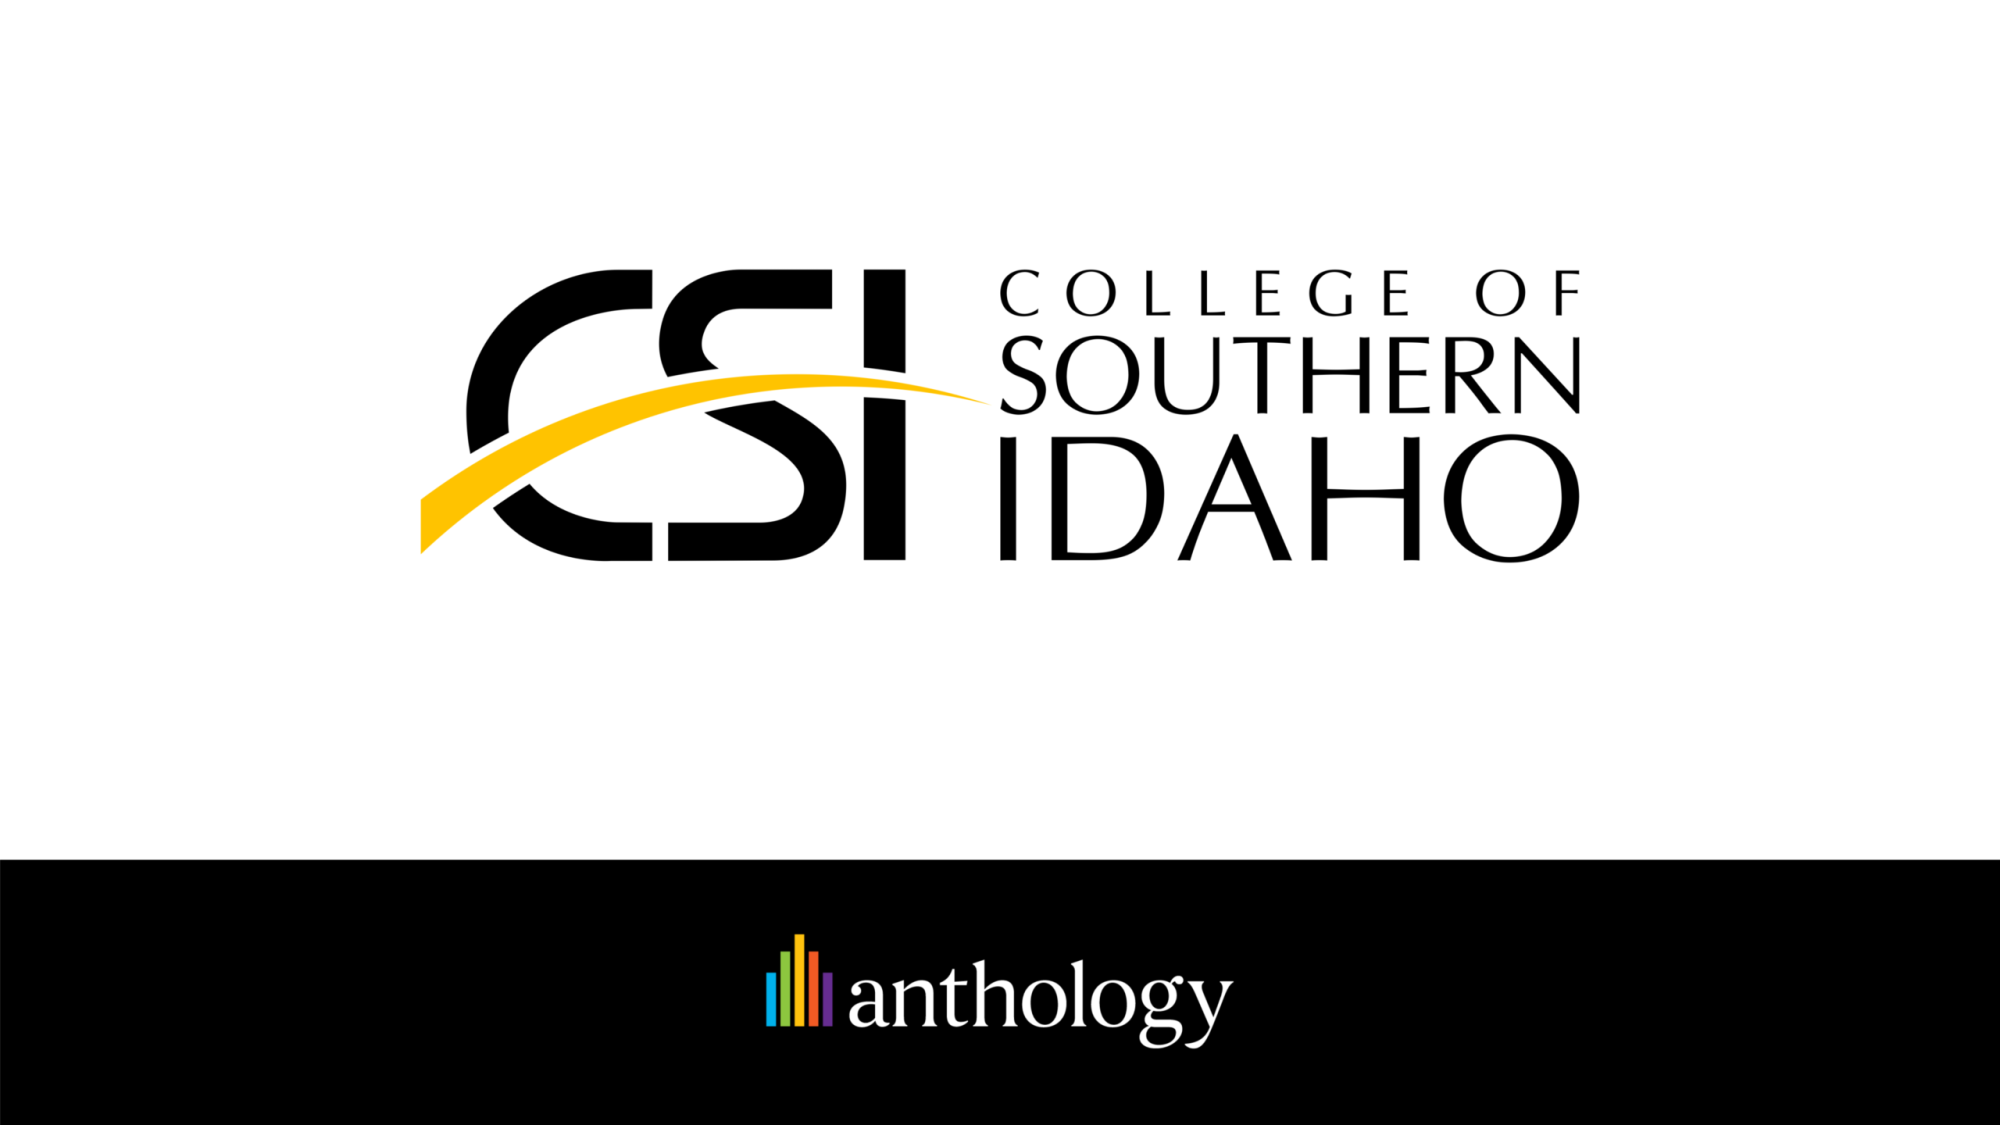 College of Southern Idaho logo lockup with the Anthology logo